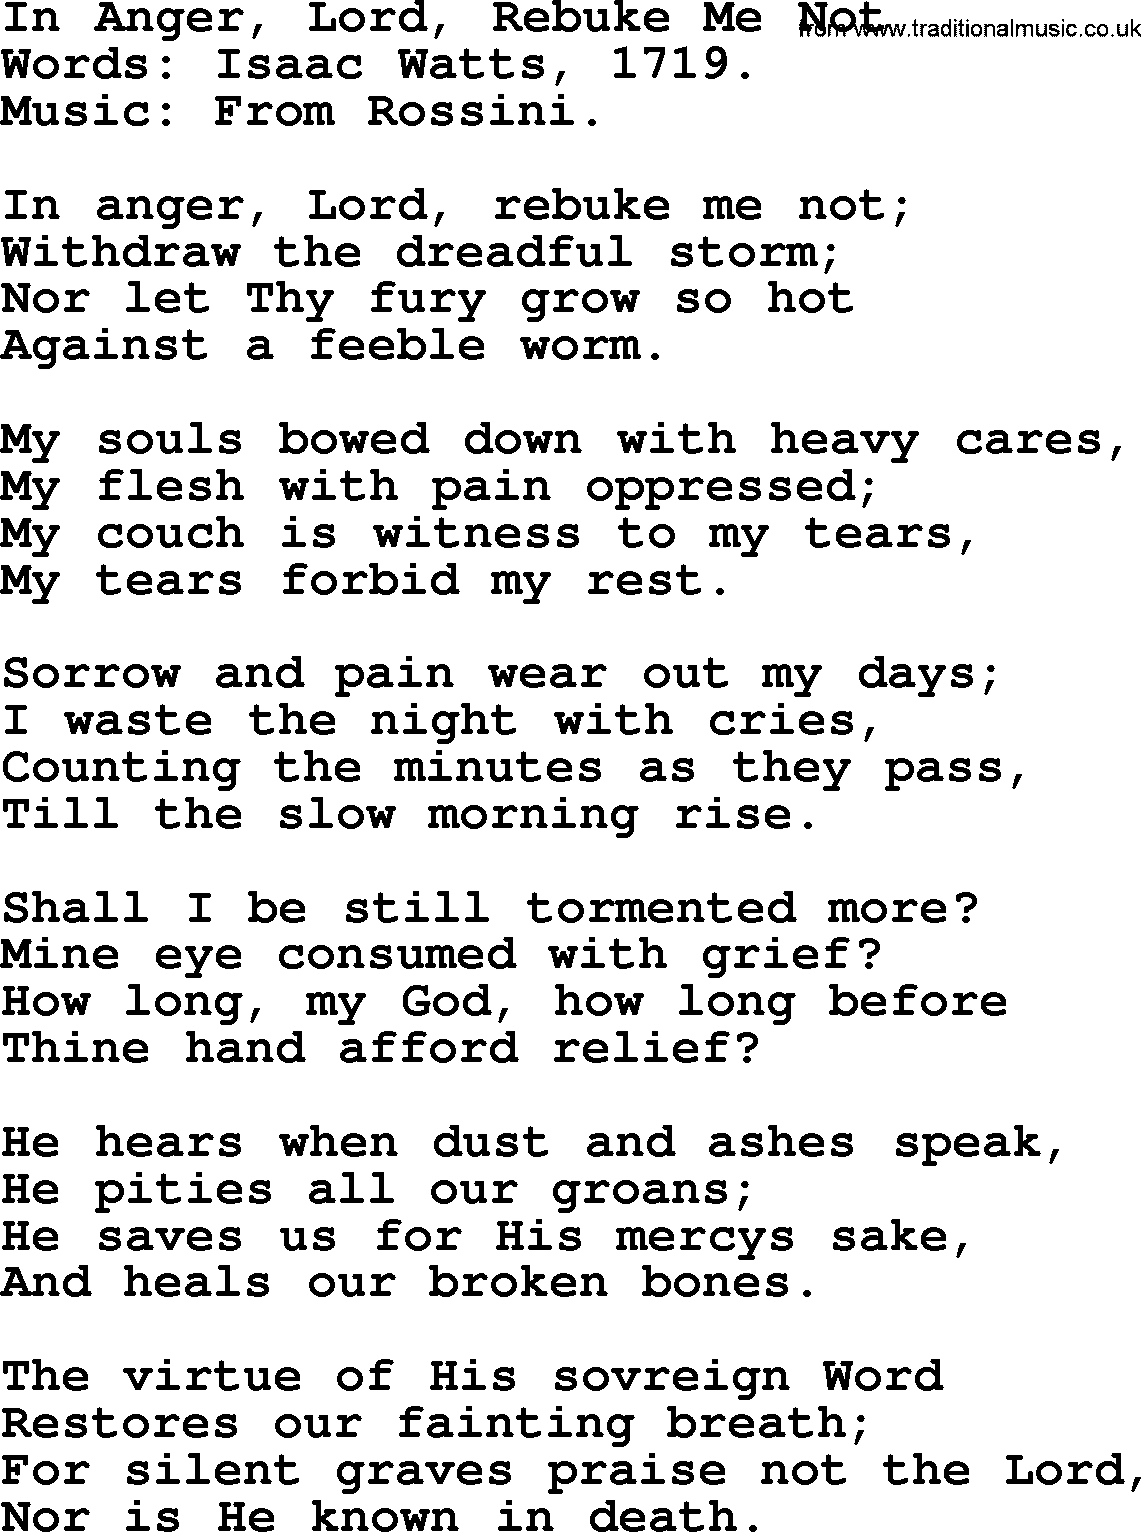 Isaac Watts Christian hymn: In Anger, Lord, Rebuke Me Not- lyricss